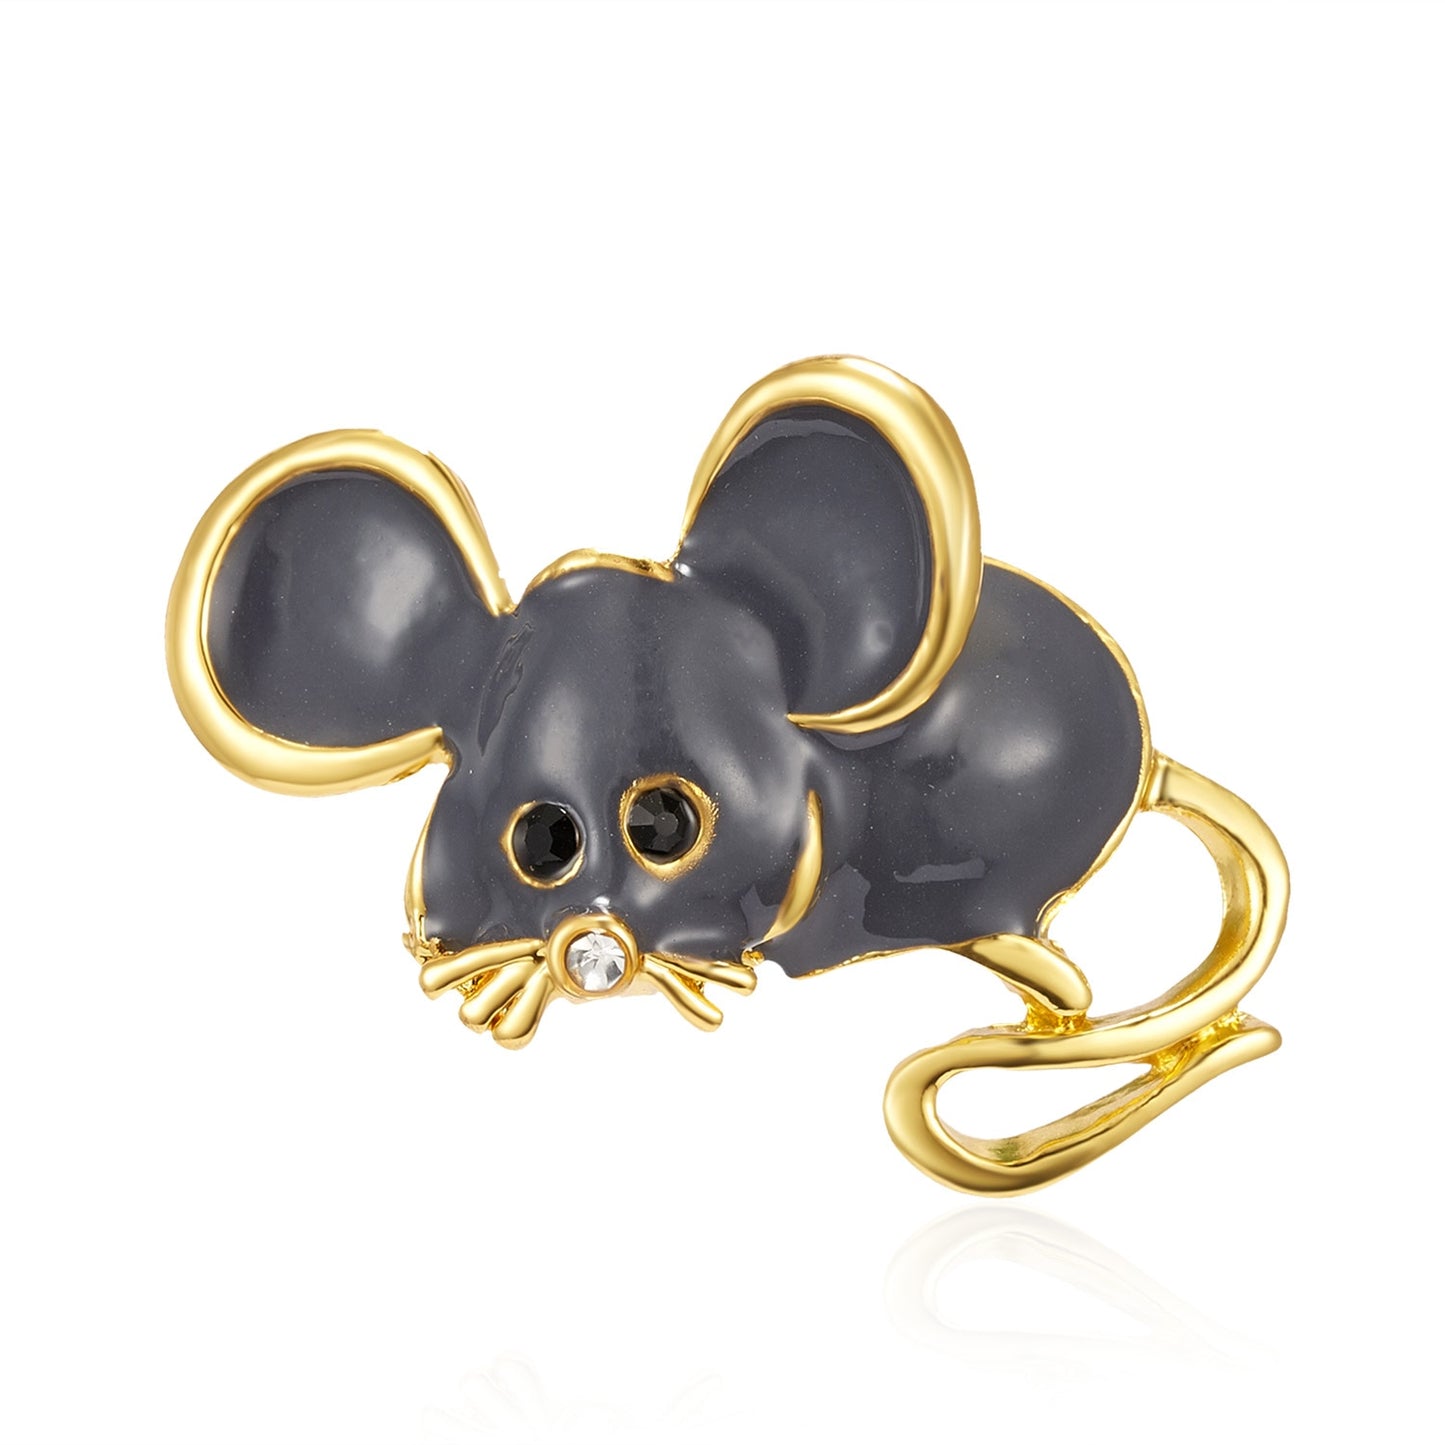 Big Eared Rat brooches